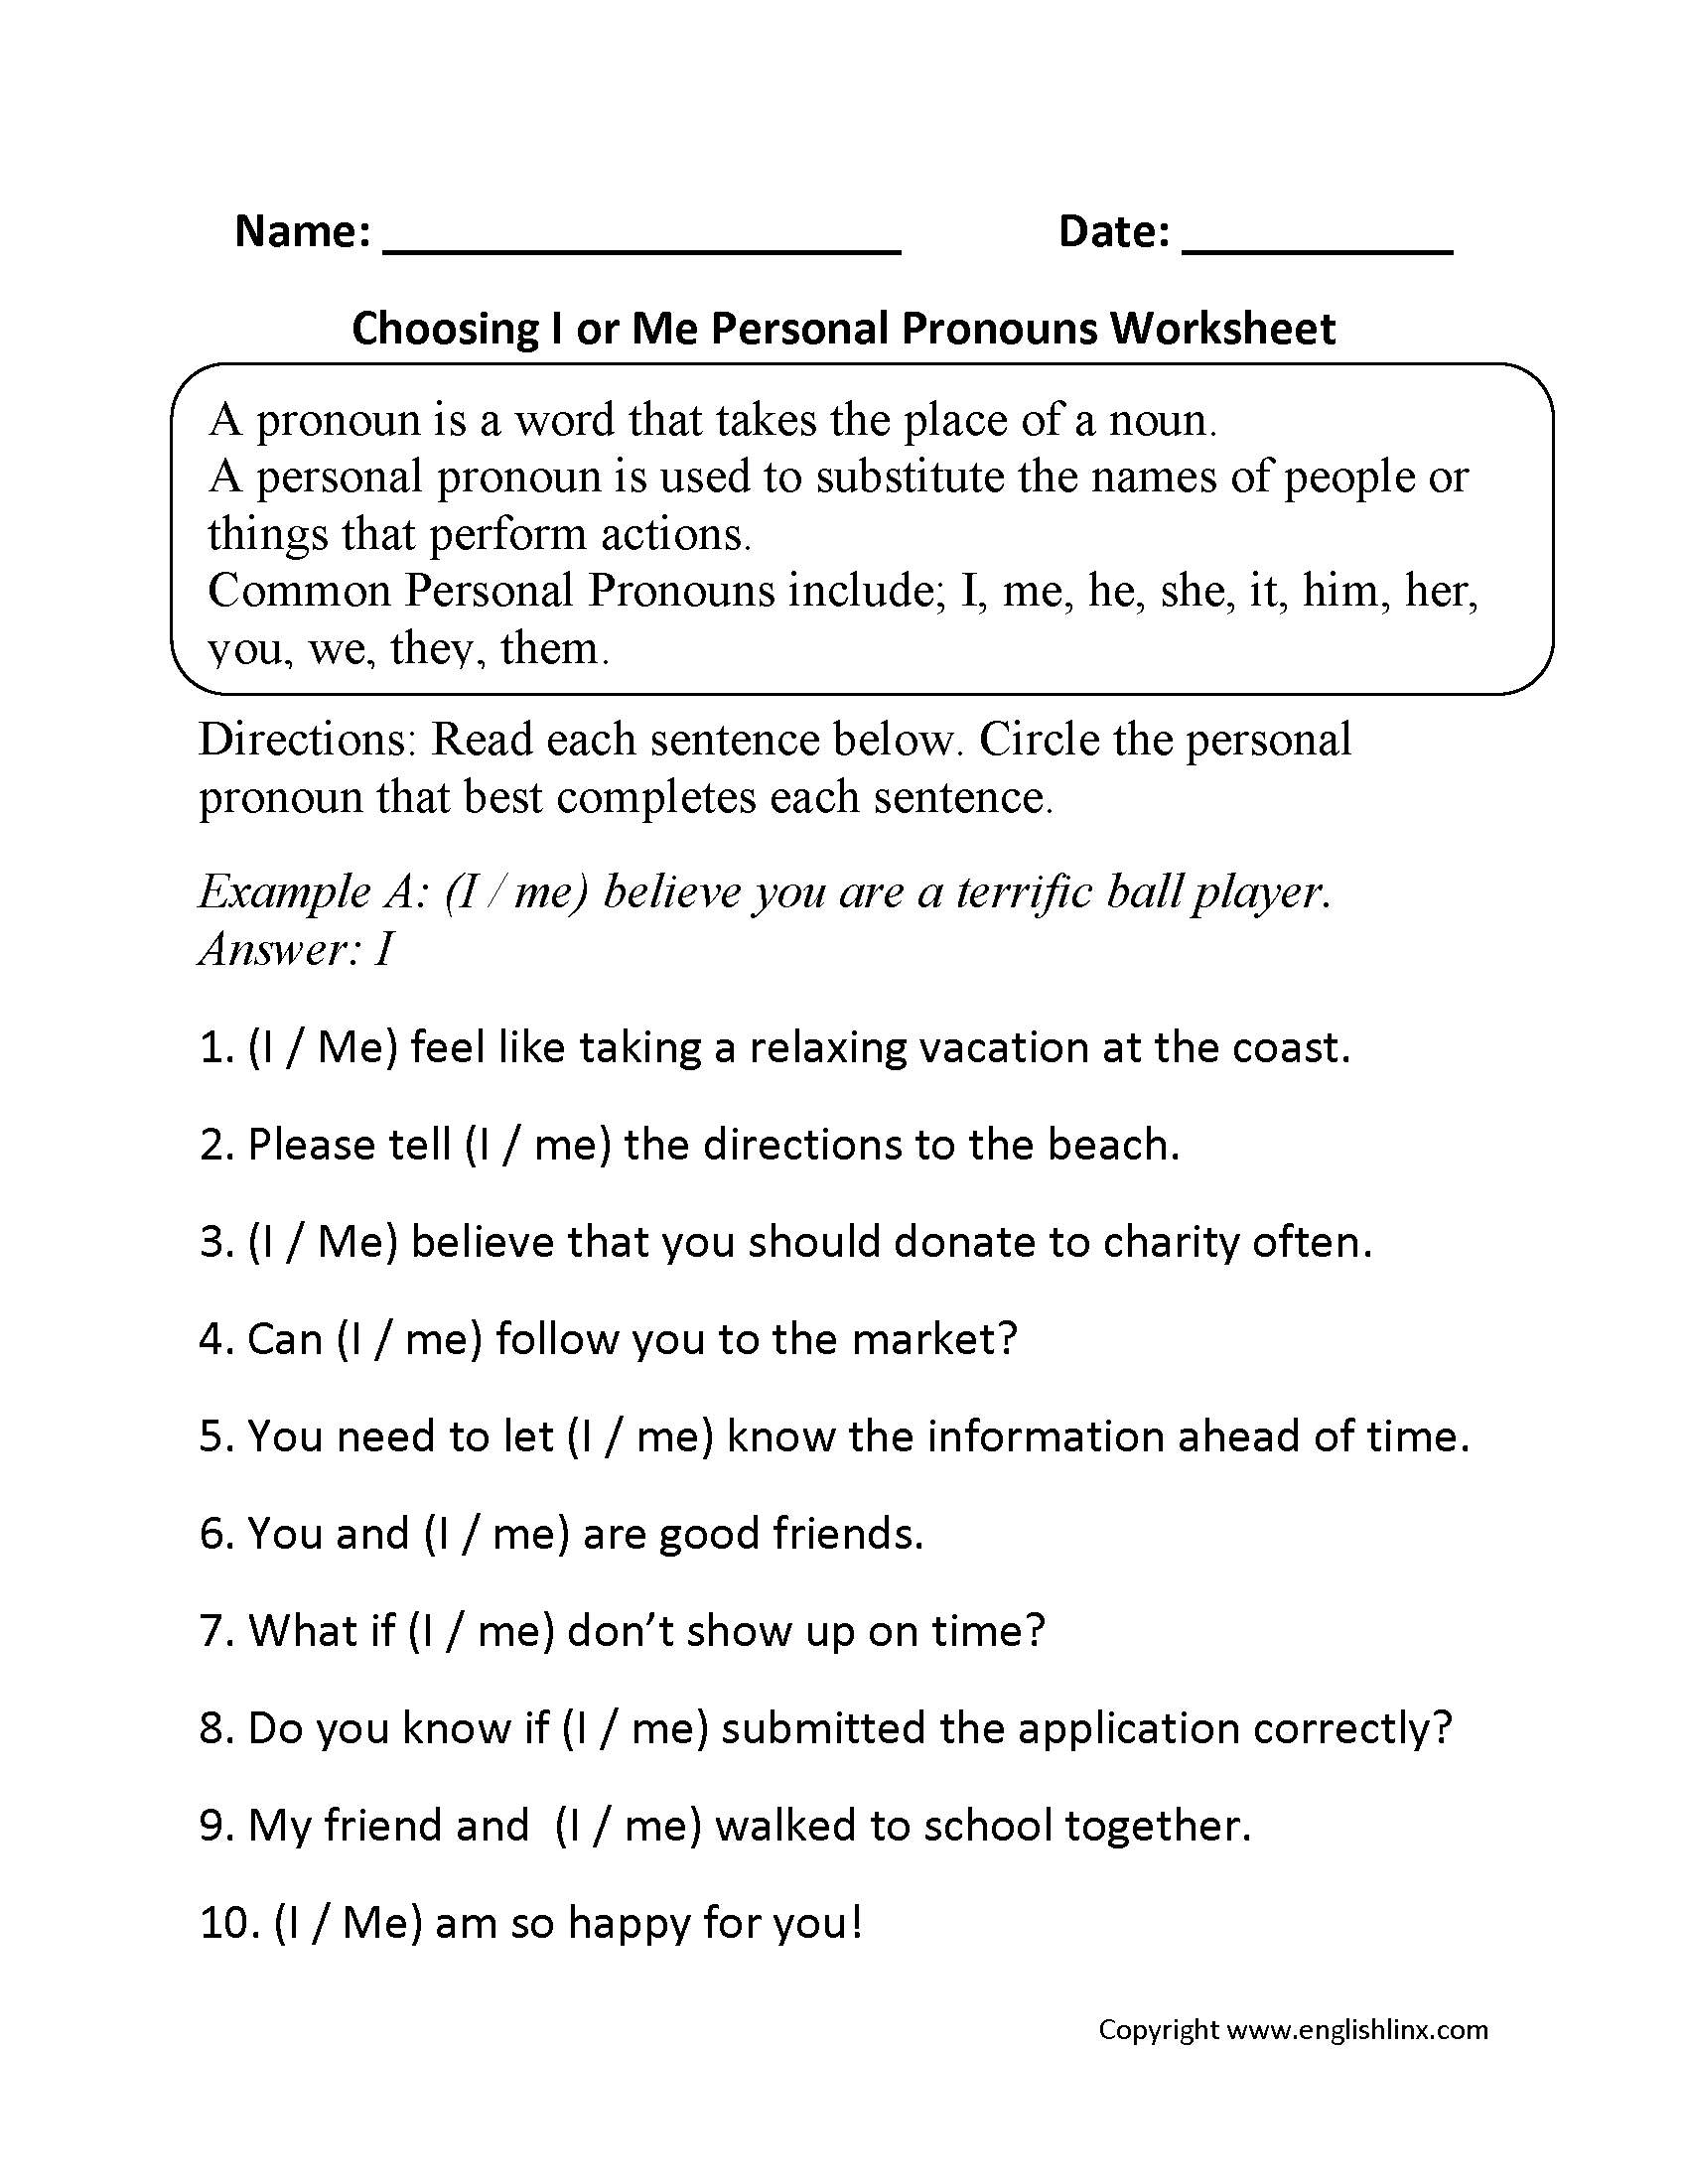 Personal Pronouns Worksheets Choosing I Or Me Personal Pronouns Worksheets